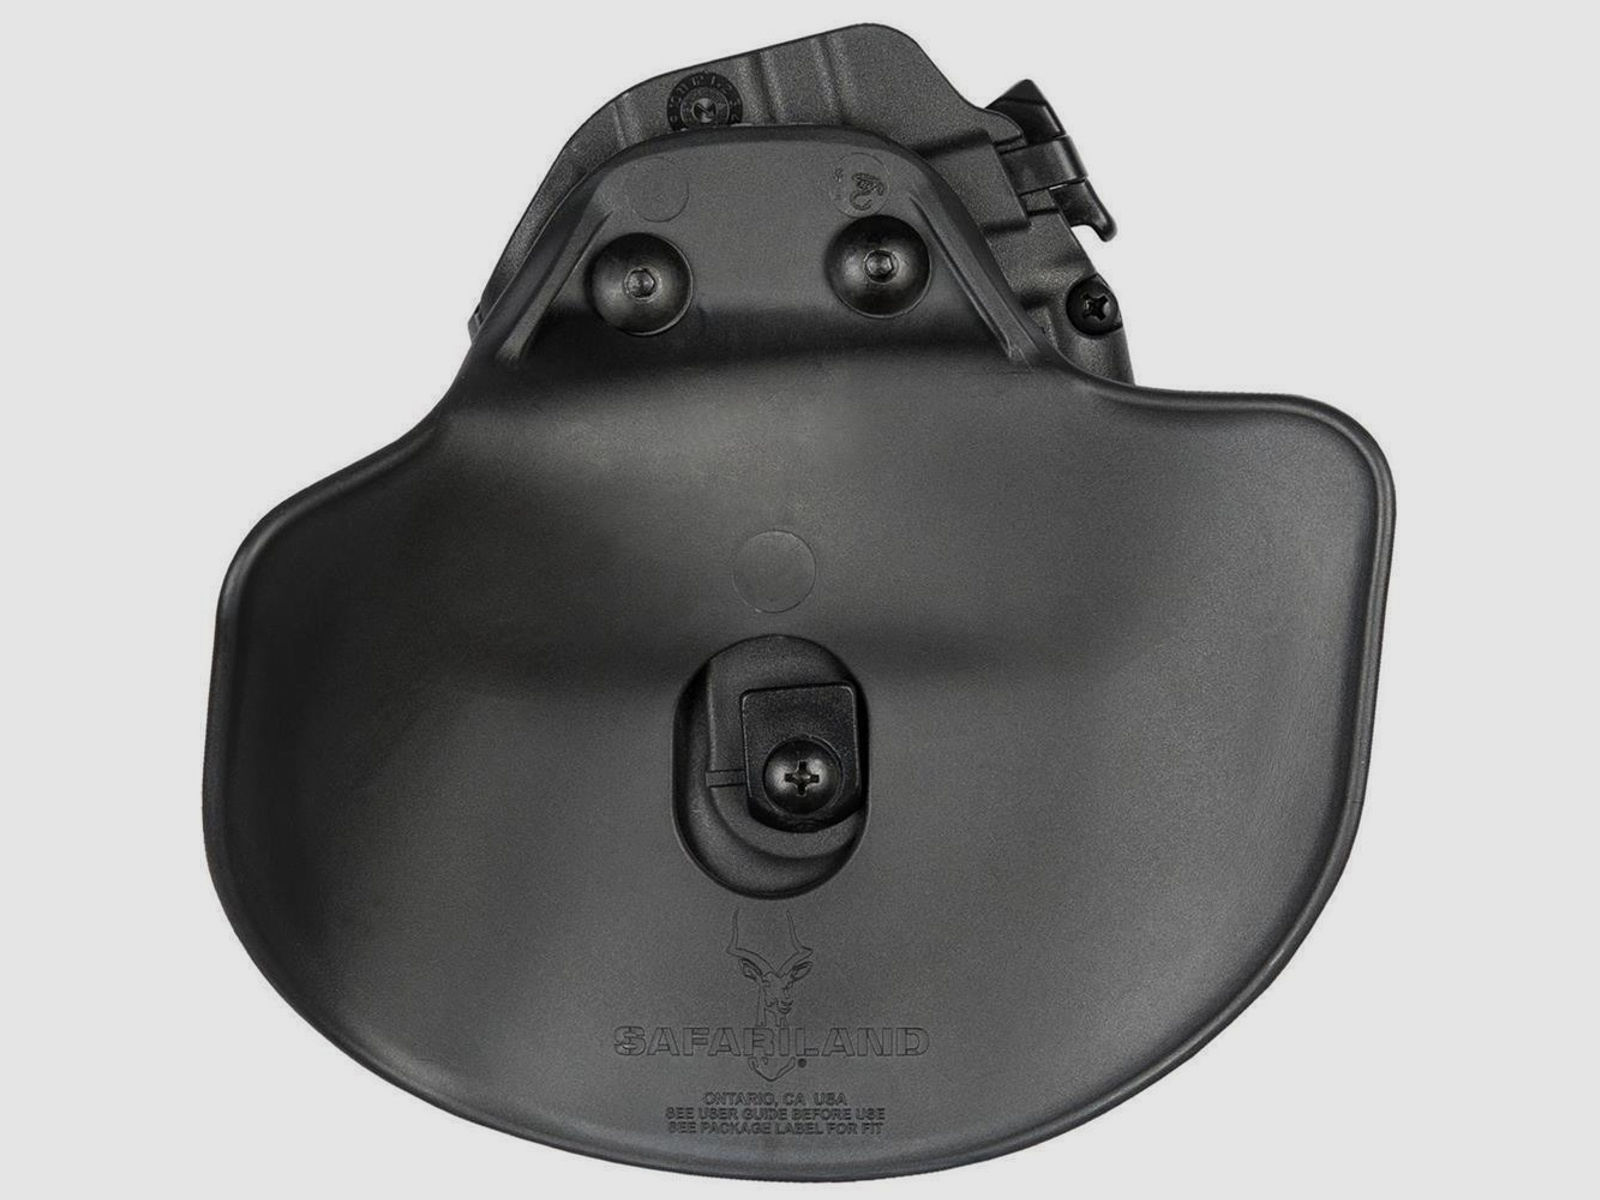 SAFARILAND 578 GLS "PRO-FIT" 7TS Paddleholster 183* Glock 26/27/30/30S/33/39,H&K P2000SK/P30SK,S&amp;W M&amp;P Shield/Compact,Walther P99C DAO/QA/AS/PPS 9mm,.40-Schwarz-Rechts